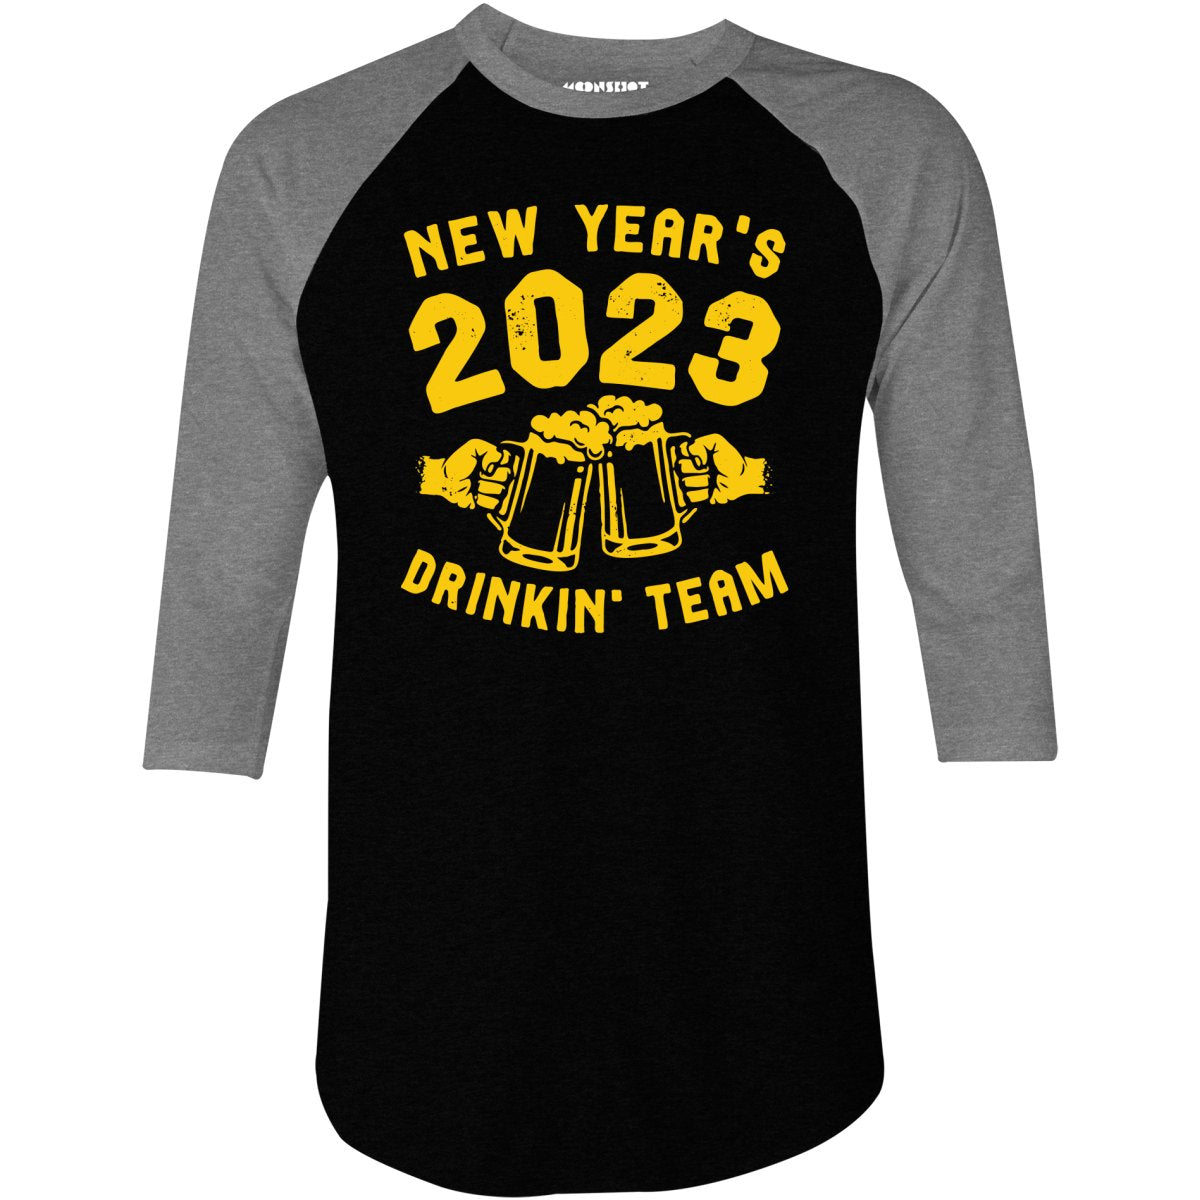 New Year's 2023 Drinkin' Team - 3/4 Sleeve Raglan T-Shirt